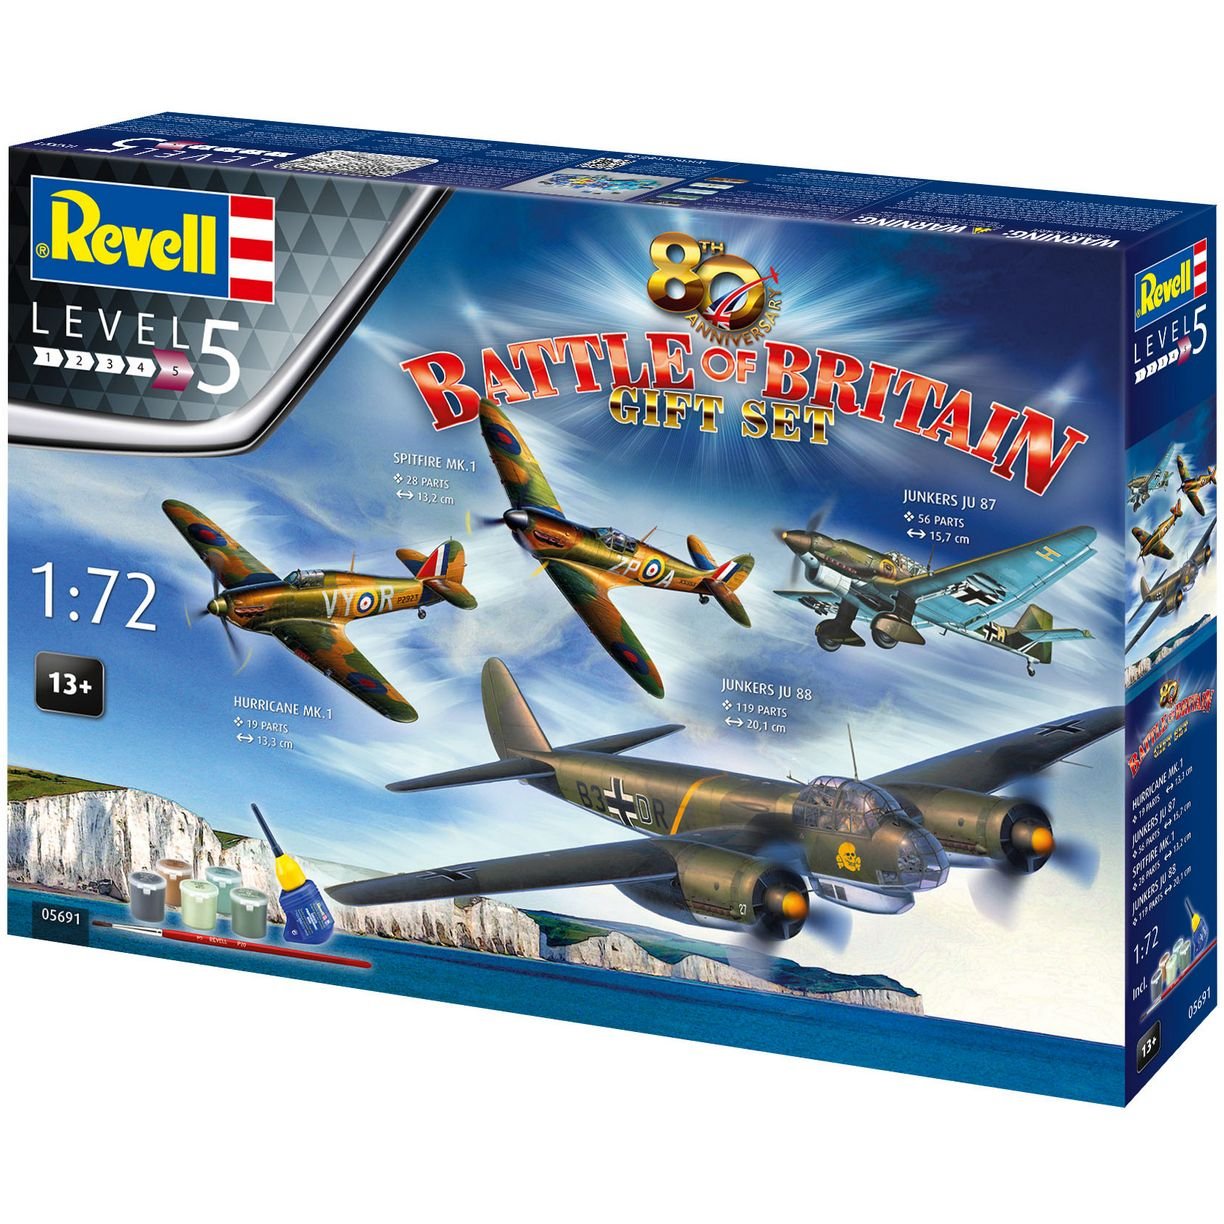 Збірна модель Revell Набір 80-річчя Битви за Британію 4 літаки, рівень 5, масштаб 1:72, 222 деталі (RVL-05691) - фото 1